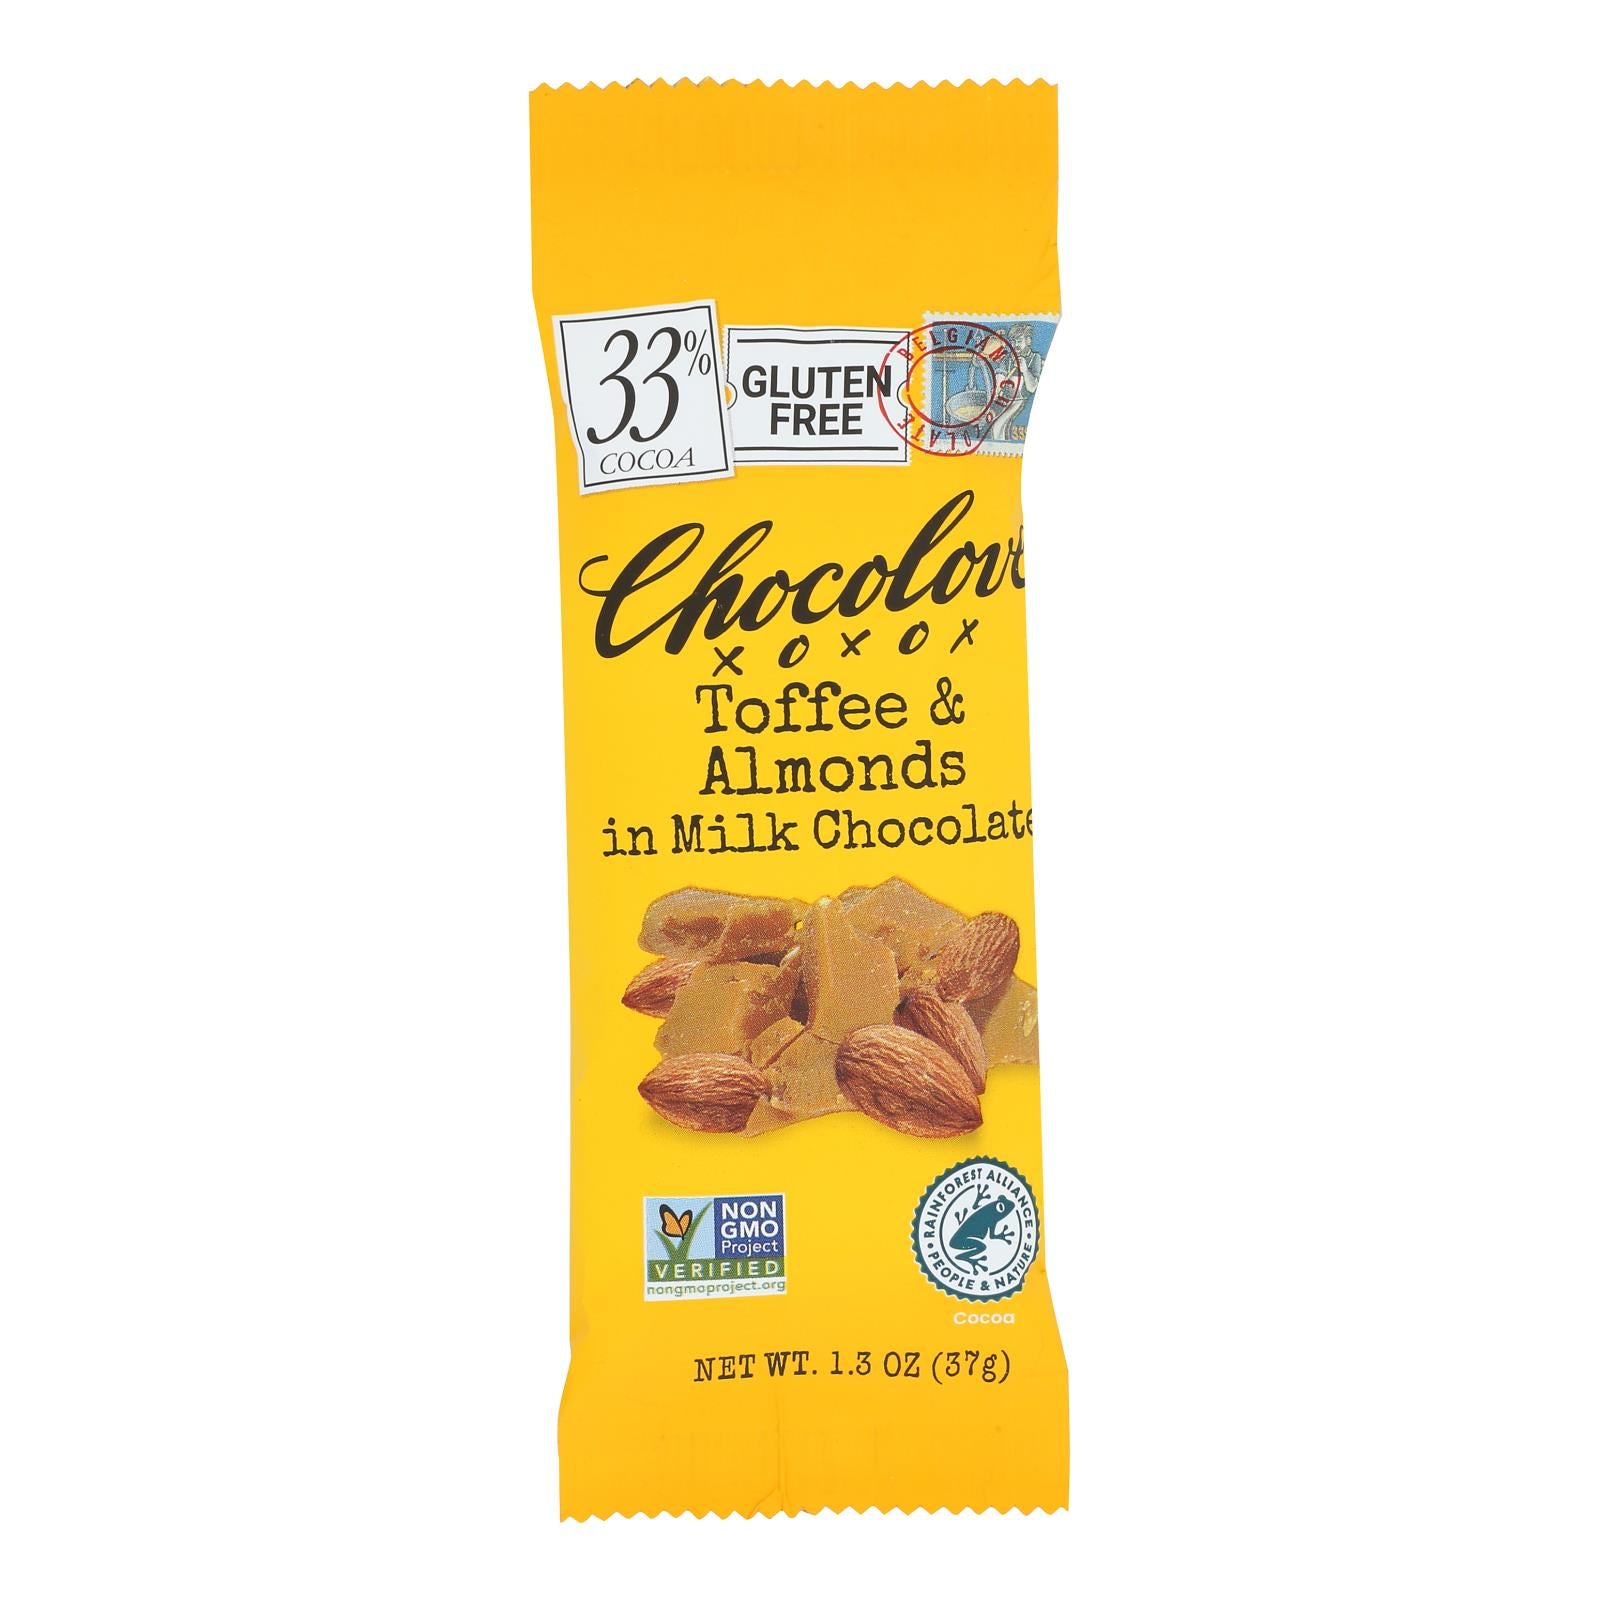 Chocolove Xoxox - Premium Chocolate Bar - Milk Chocolate - Toffee and Almonds - Mini - 1.3 oz Bars - Case of 12